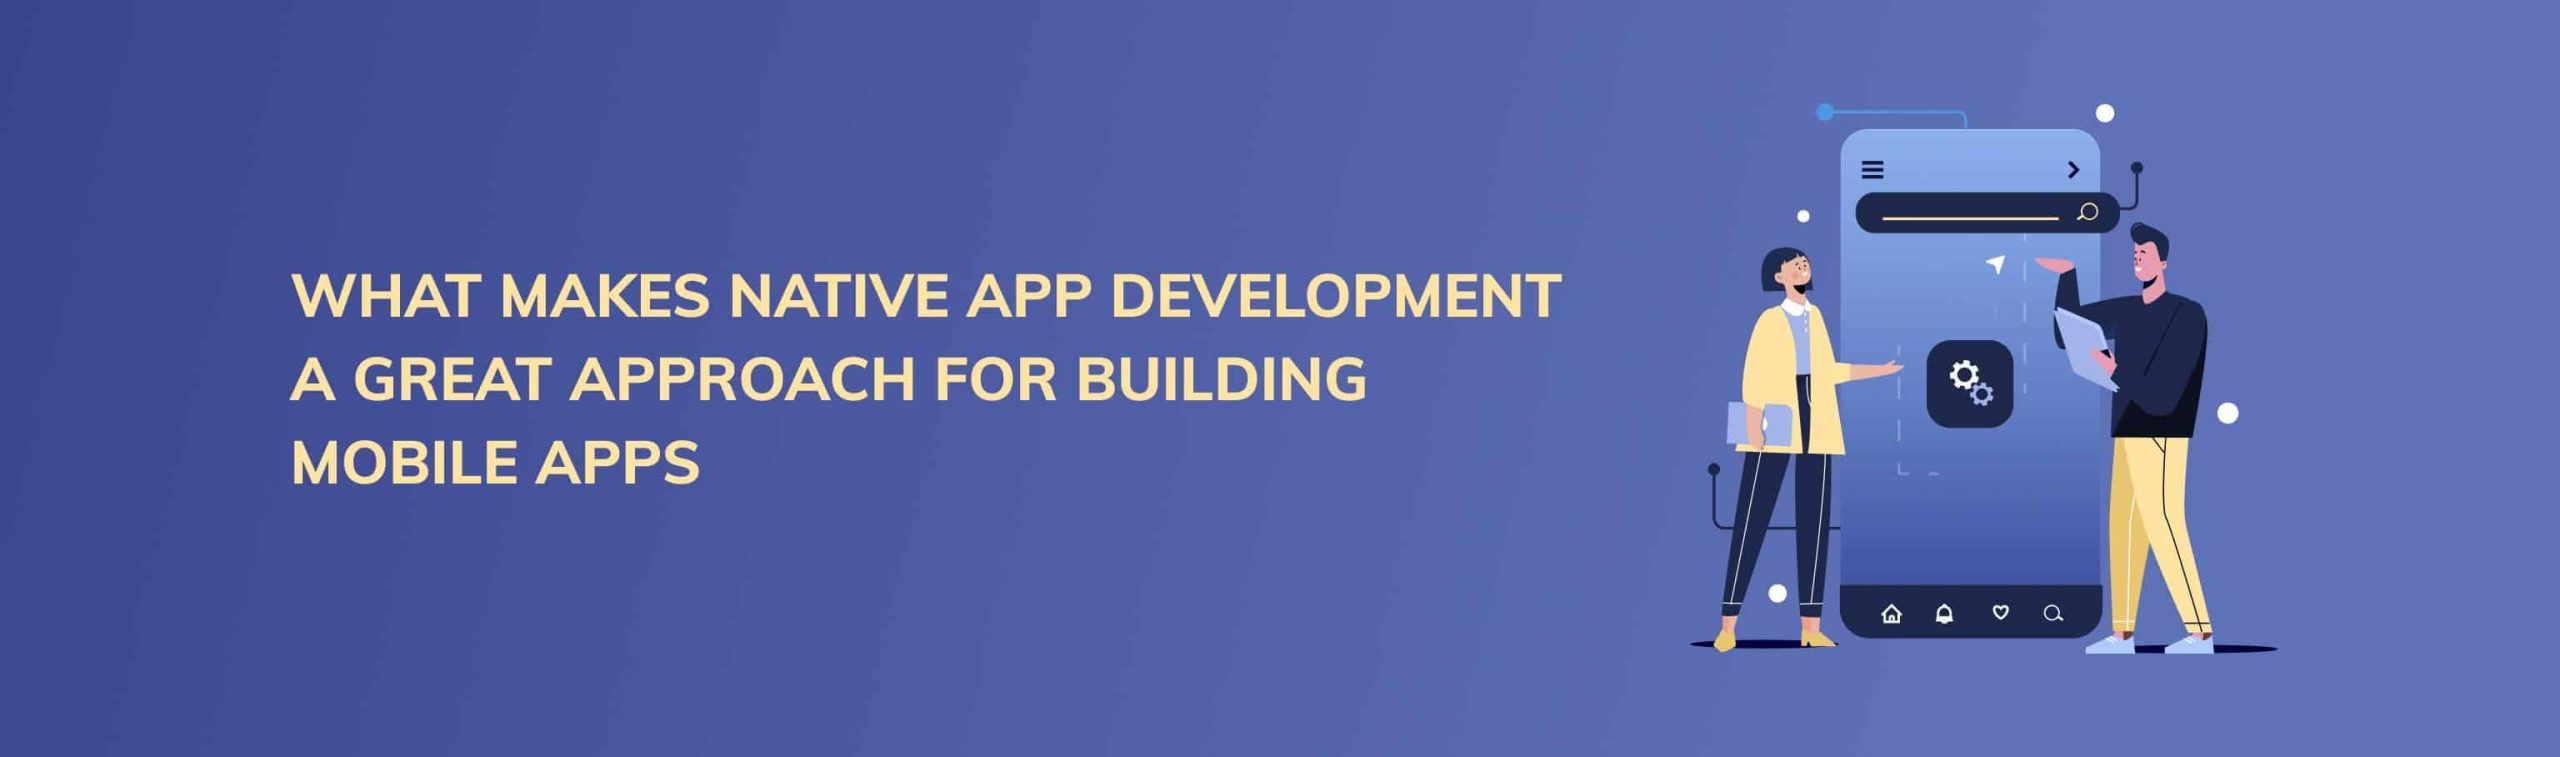 native-app-development-1